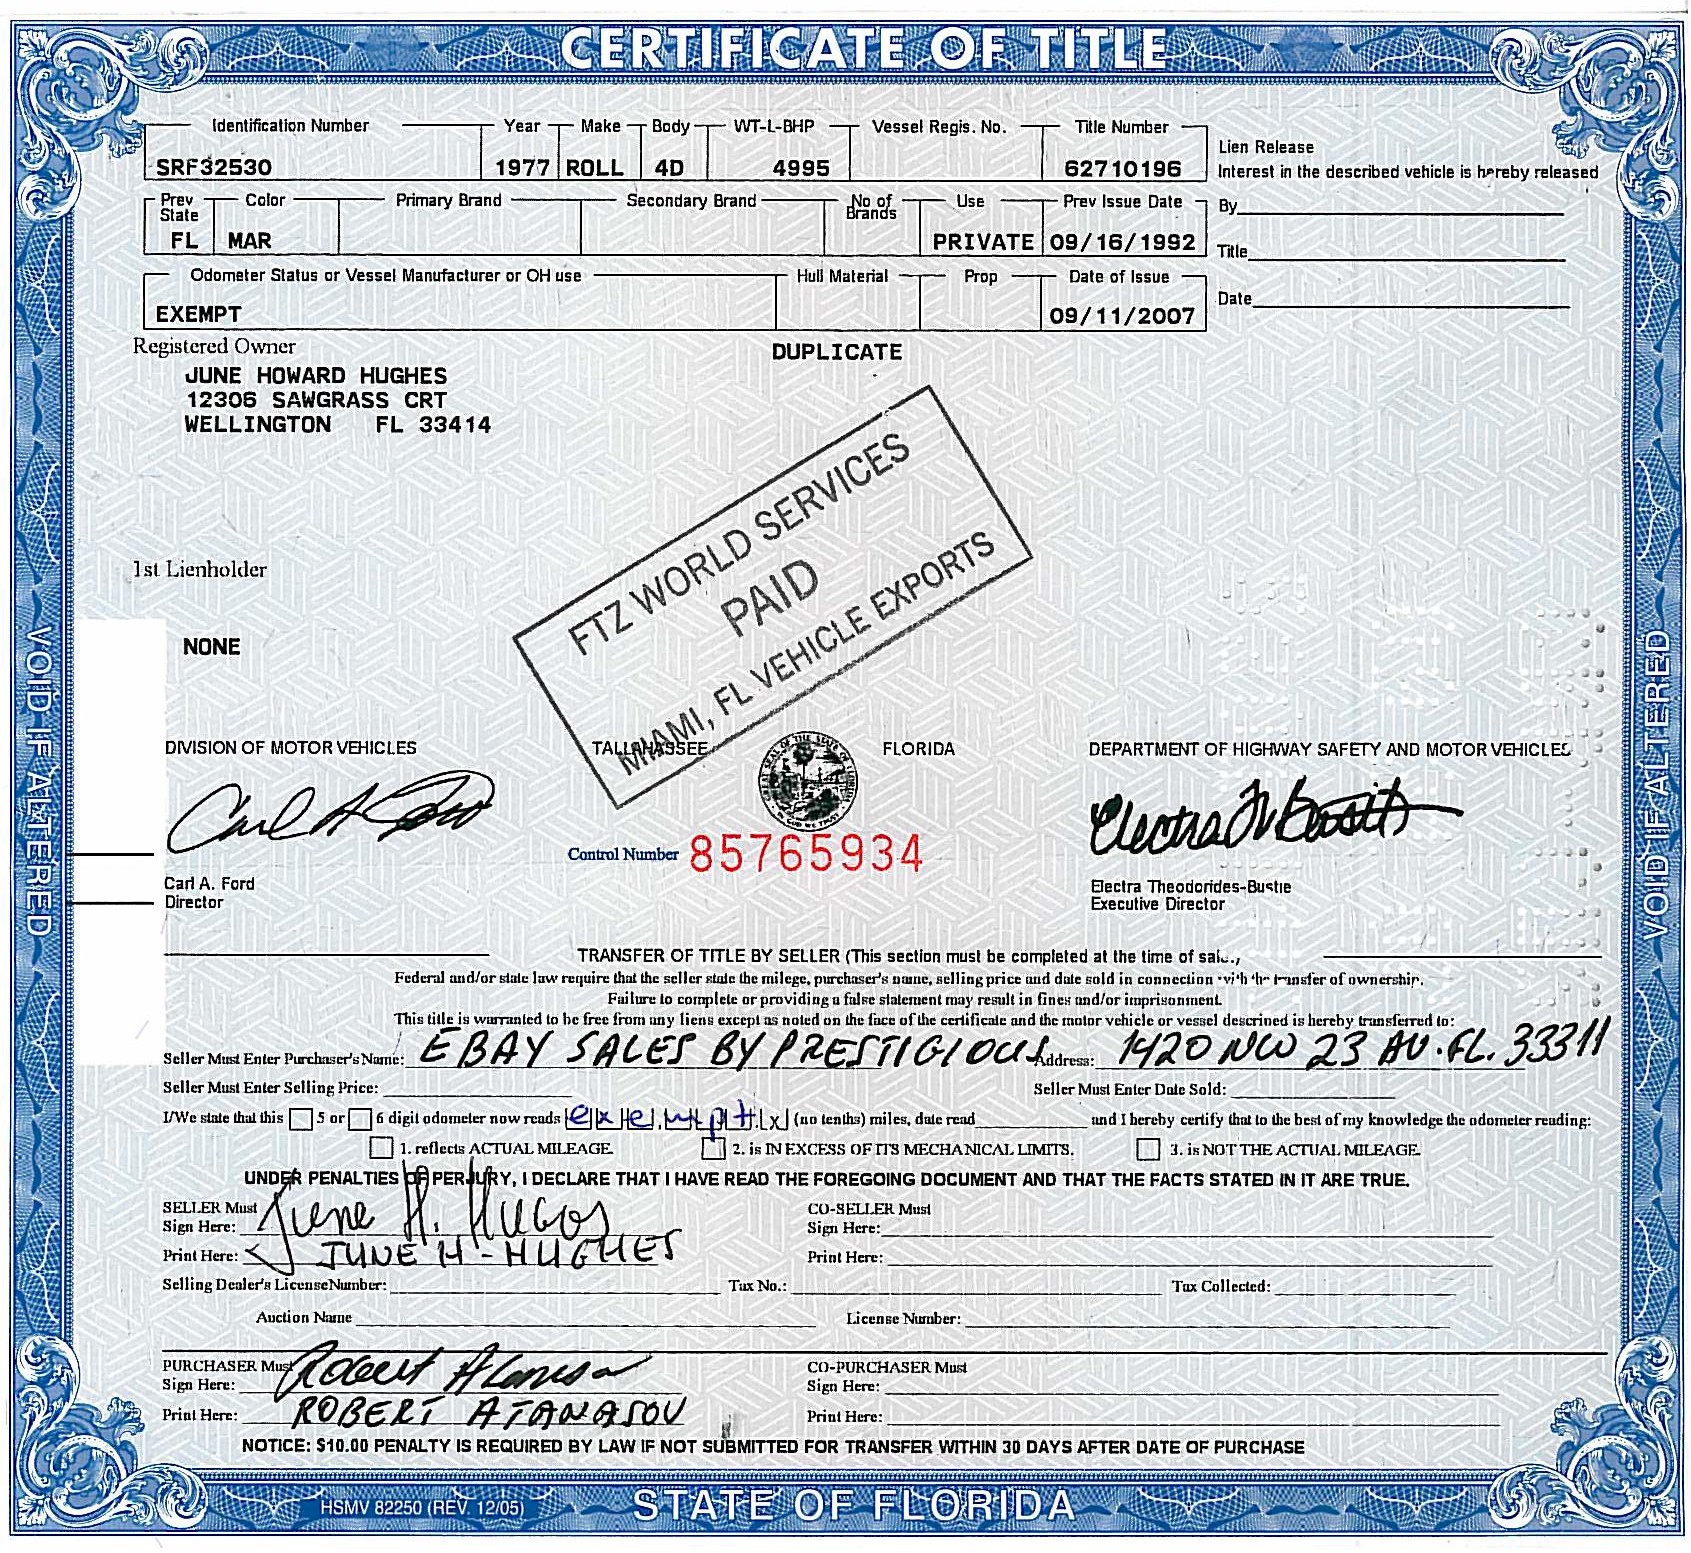 Title views. Title на машину. Тайтл на автомобиль. Vehicle Certificate of title. Тайтл на машину в США.